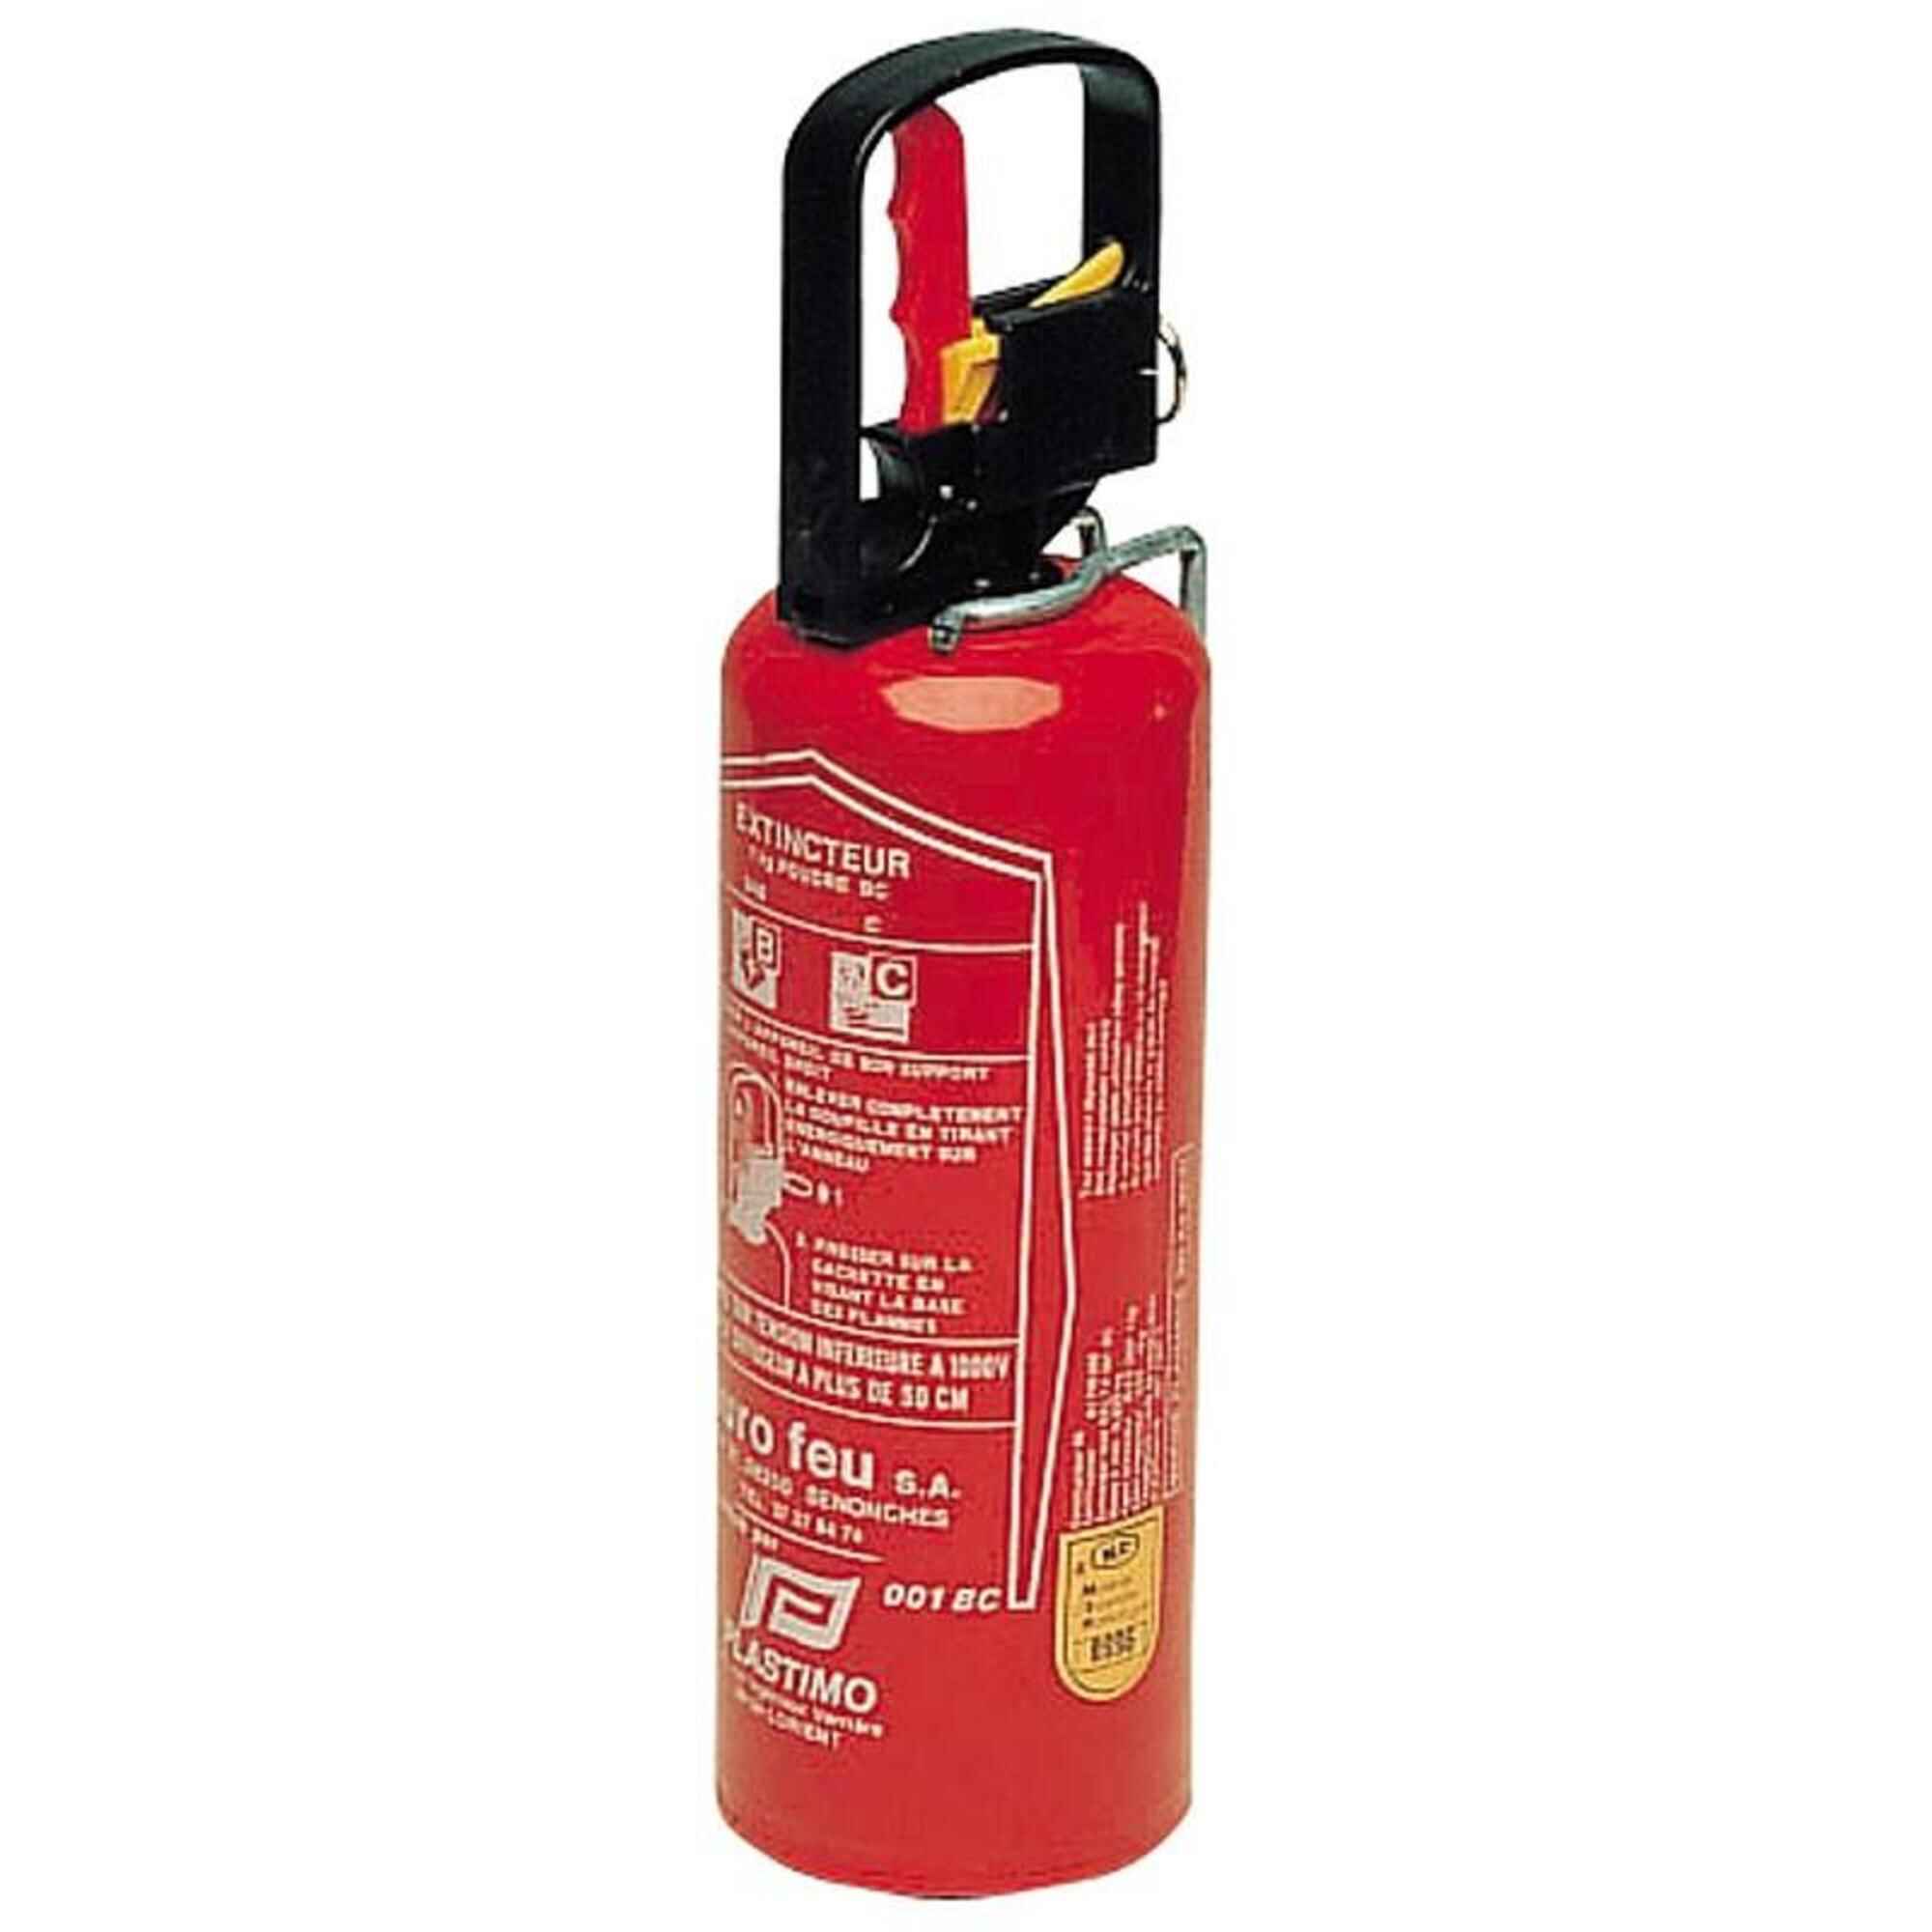 Plastimo Marine Powder Fire Extinguisher 1 kg